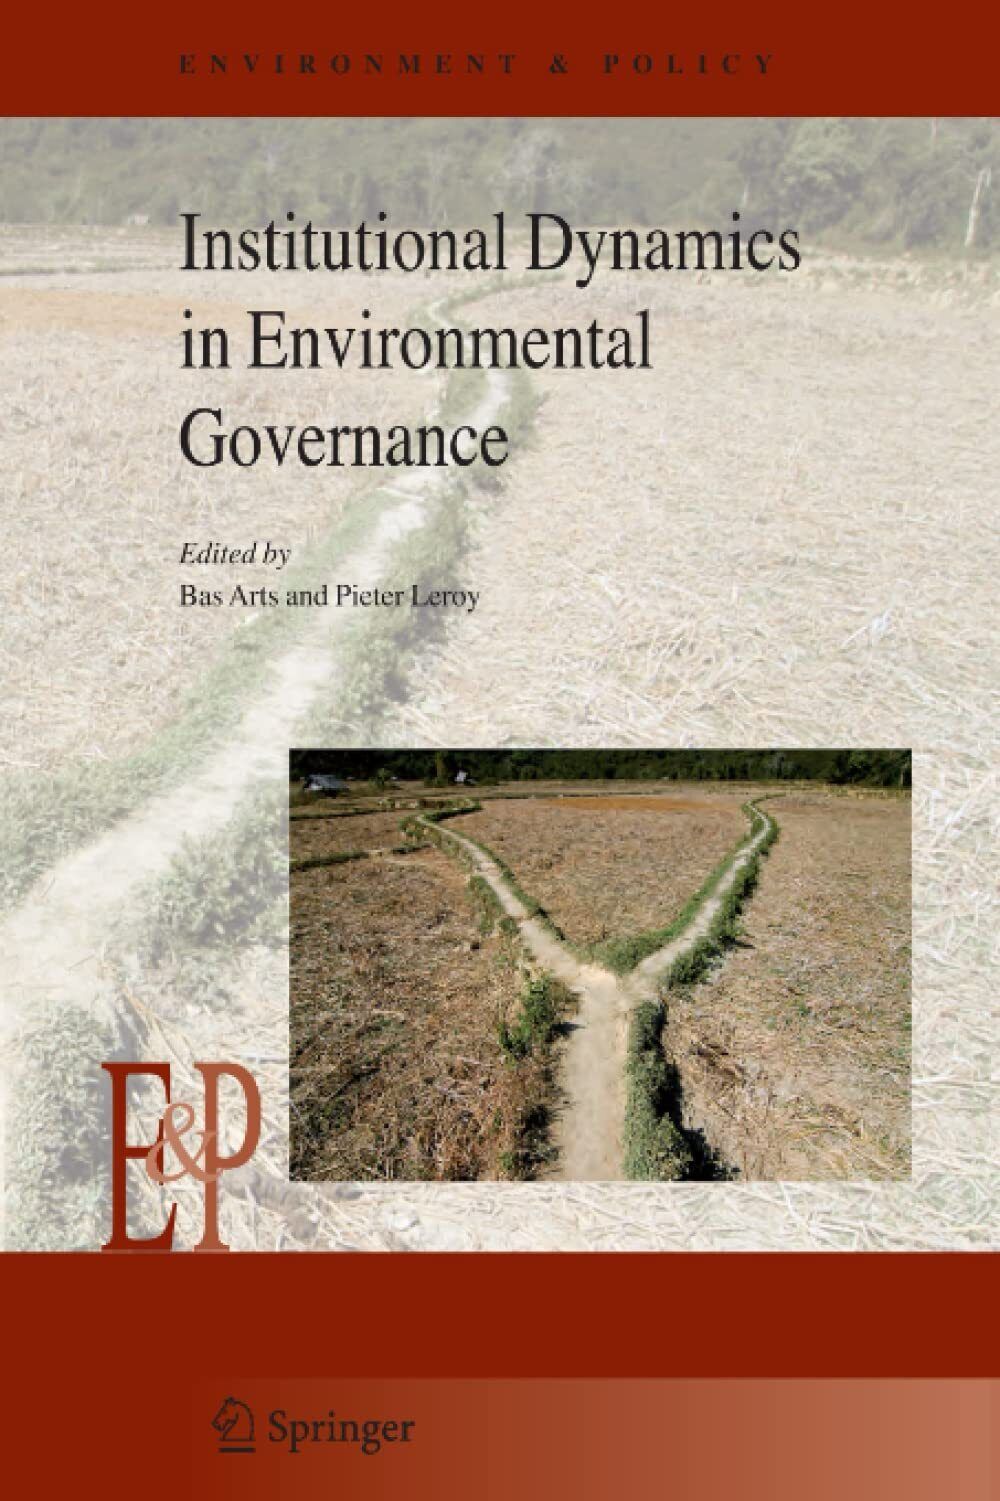 Institutional Dynamics in Environmental Governance - Bas Arts - Springer, 2010